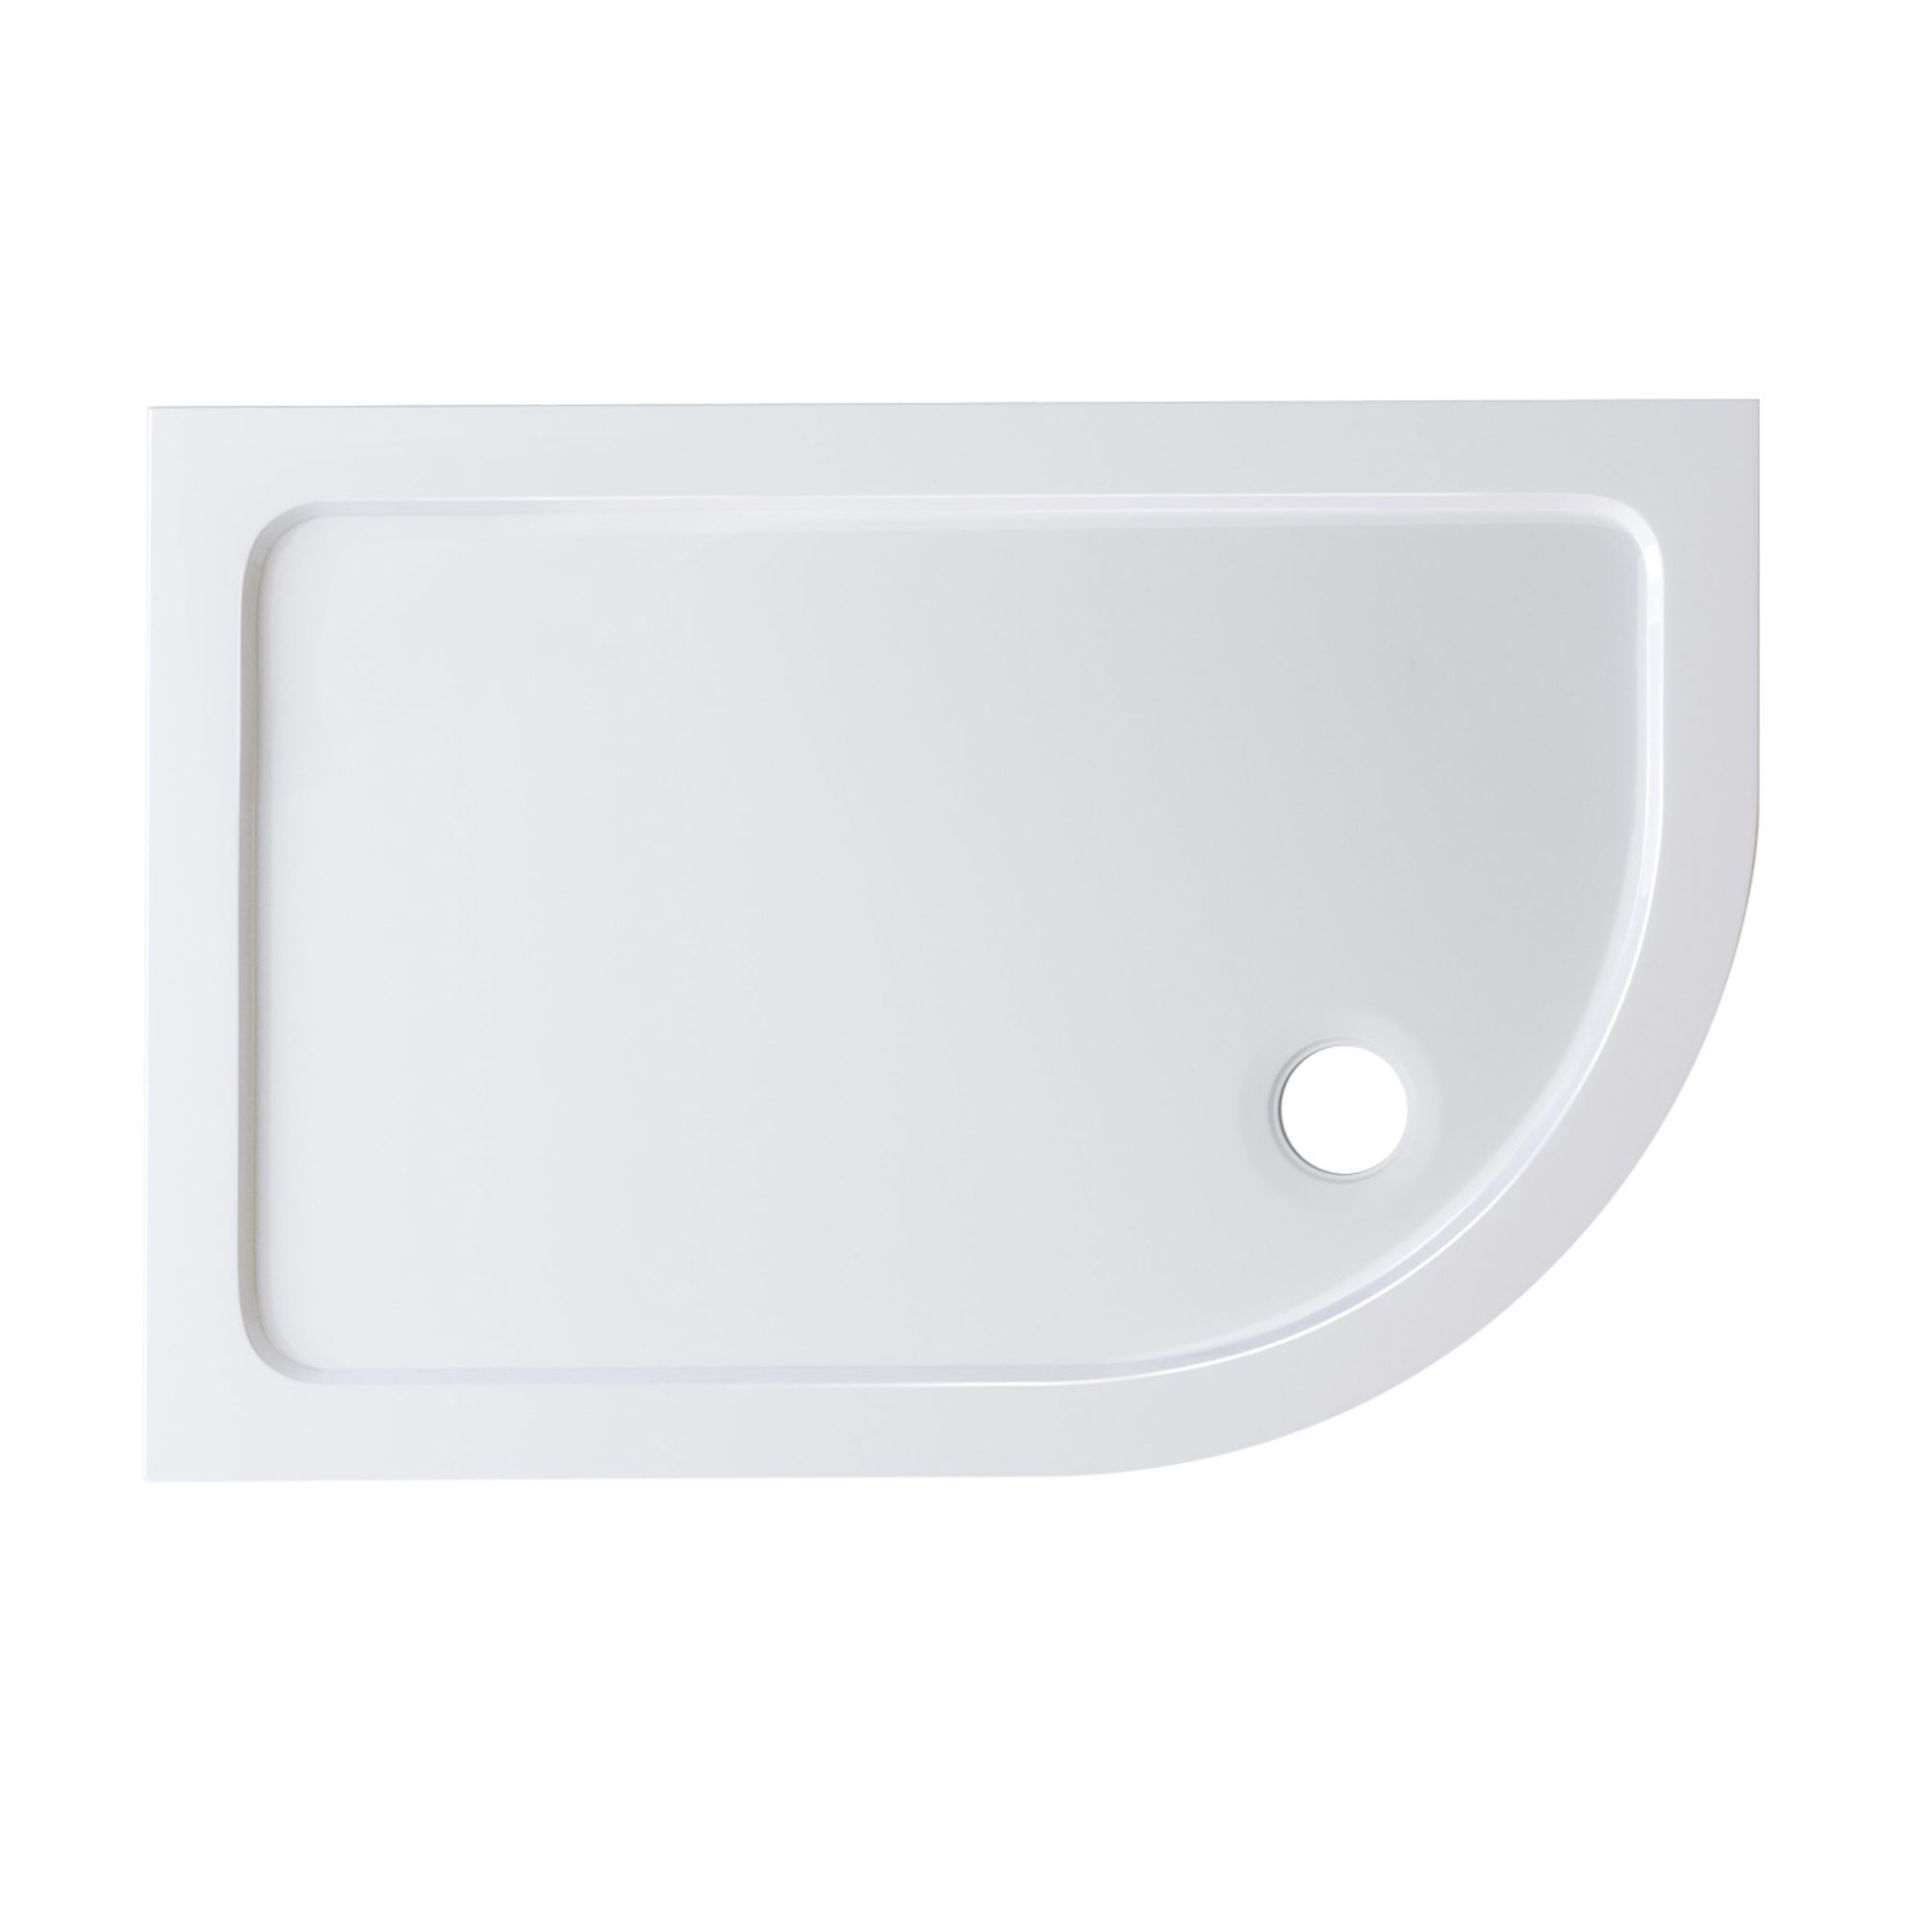 (DK235) 1200x800mm Offset Quadrant Ultra Slim Stone Shower Tray - Right. Low profile ultra slim